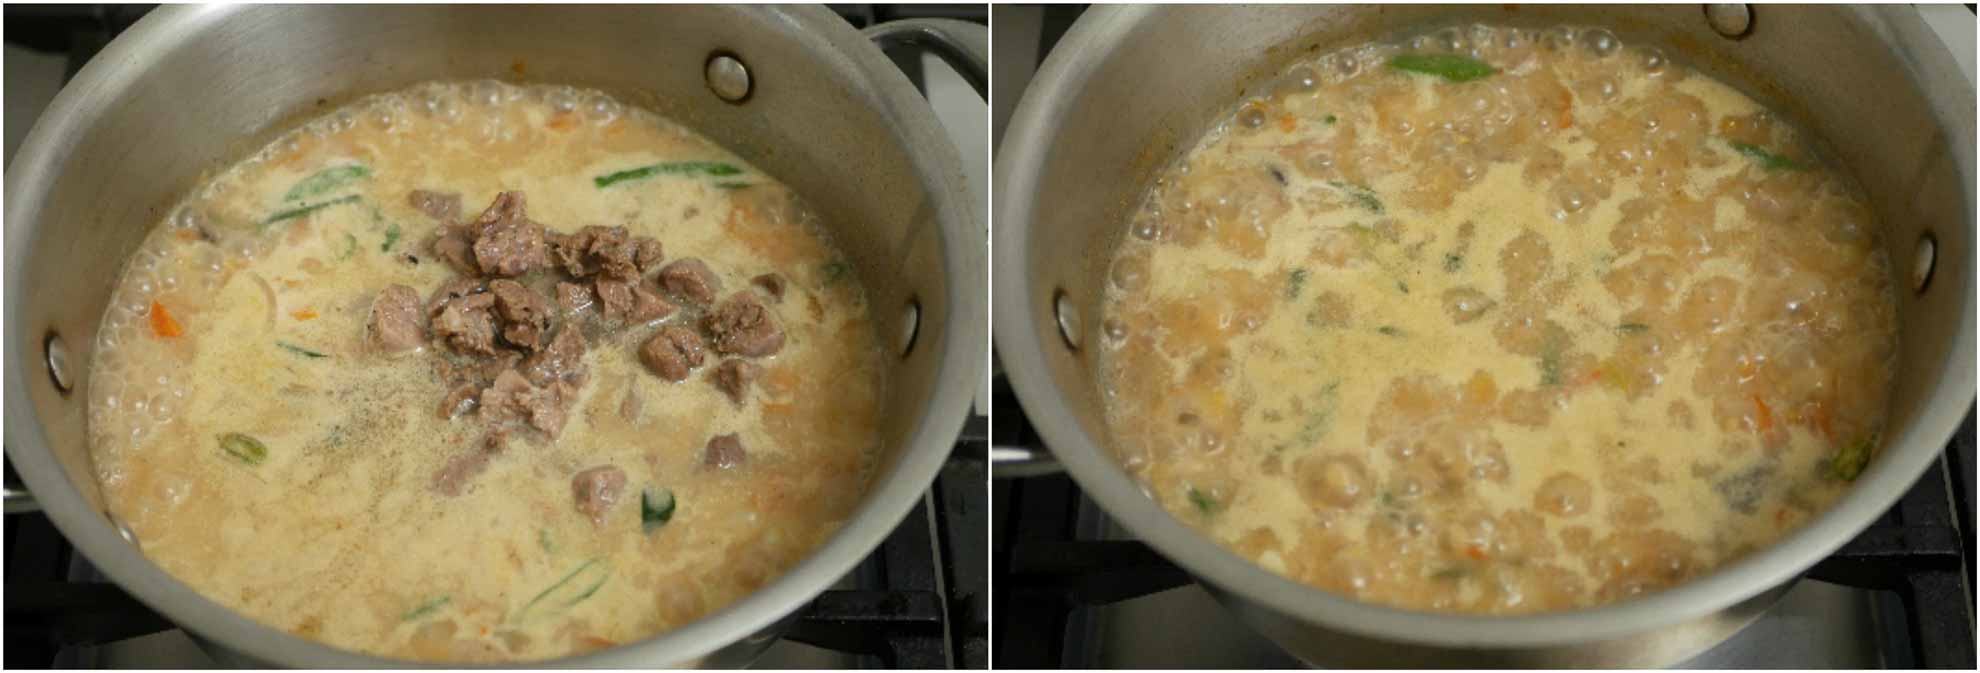 kerala-mutton-stew-recipe-for-appam-10